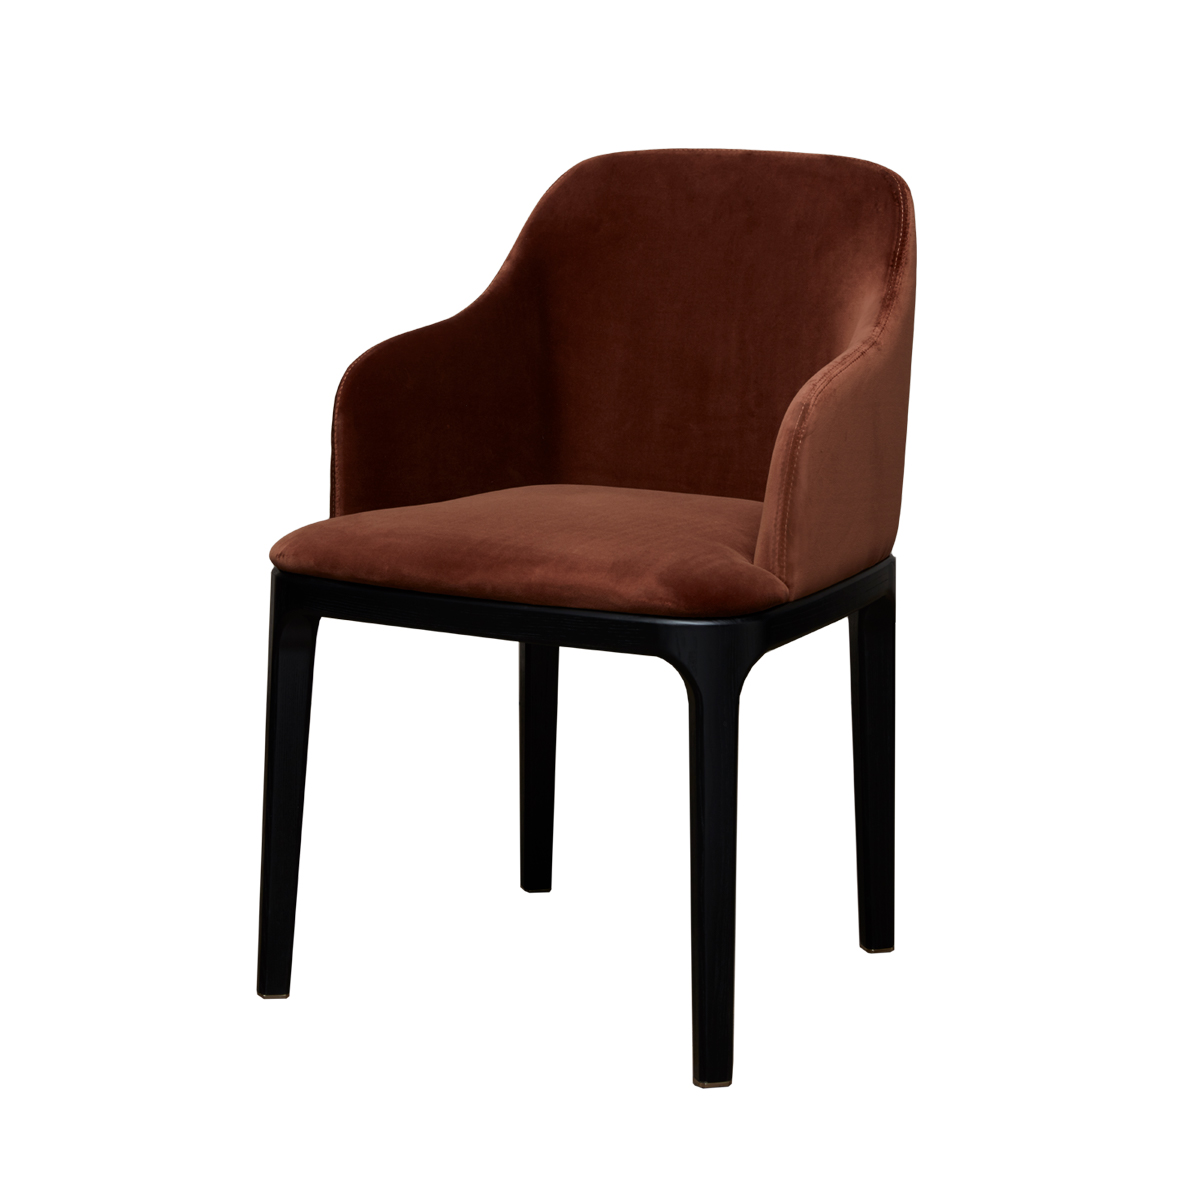 Gemma Dining Chair X – Rust